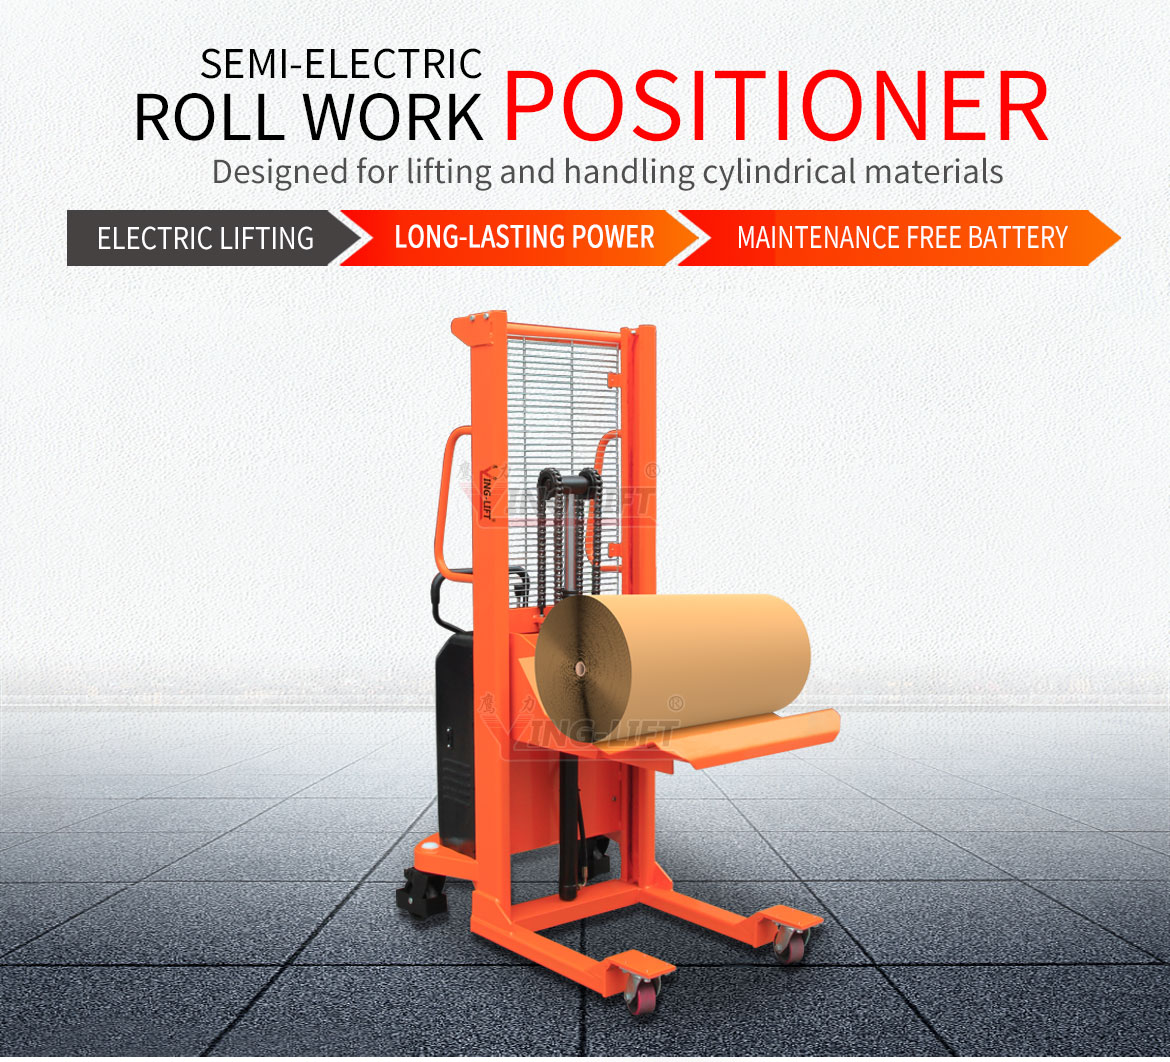 Semi-electric Roll Work Positioner